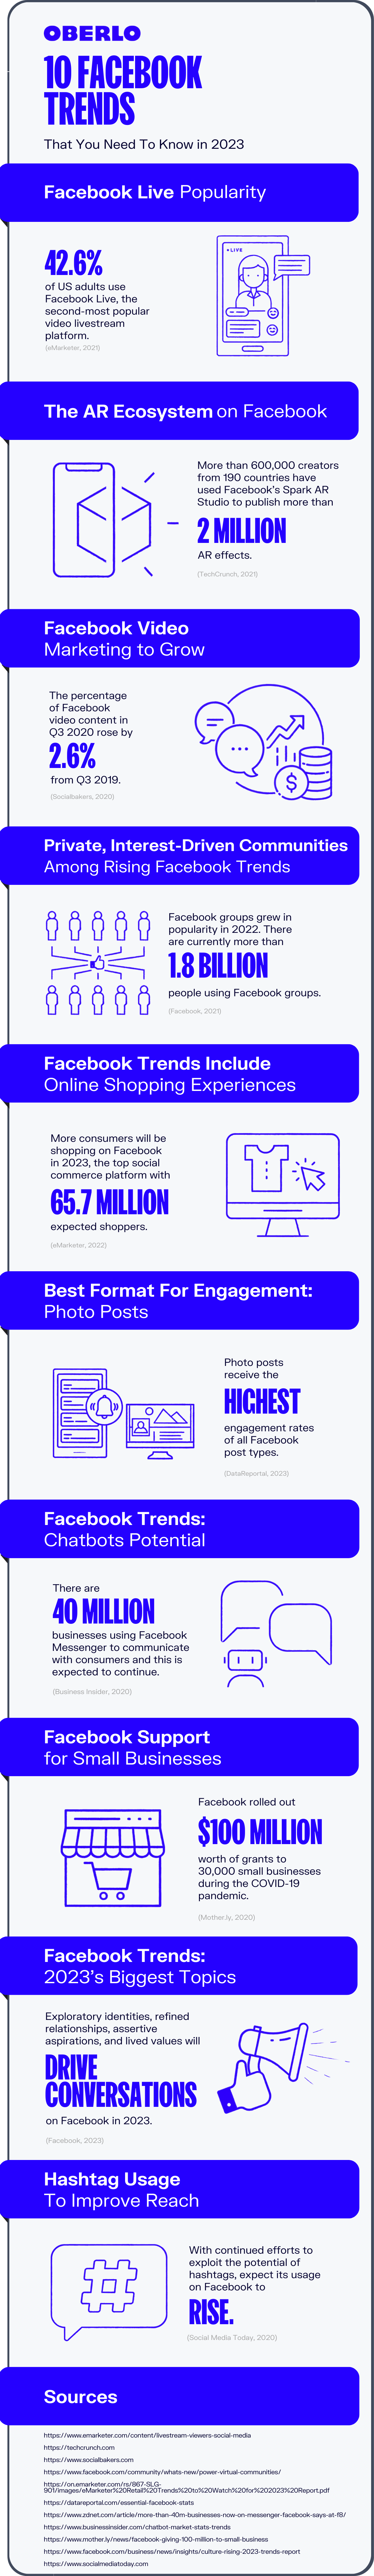 facebook trends full infographic